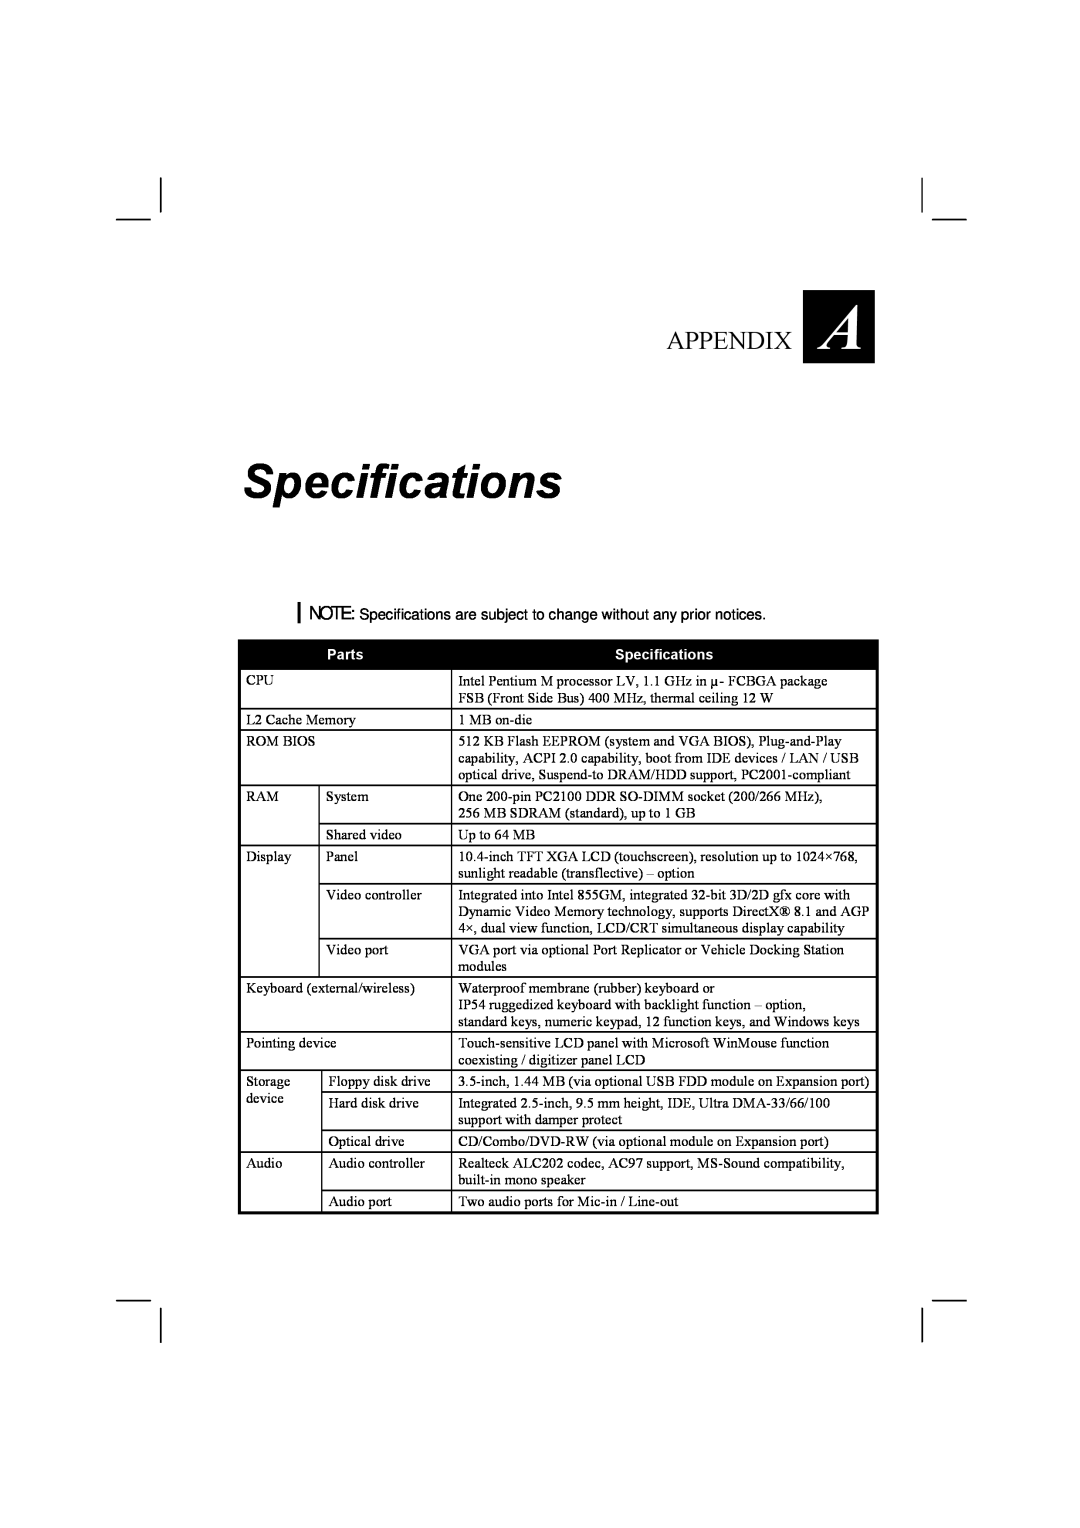 TAG 20 Series manual Specifications, Appendix, Parts 